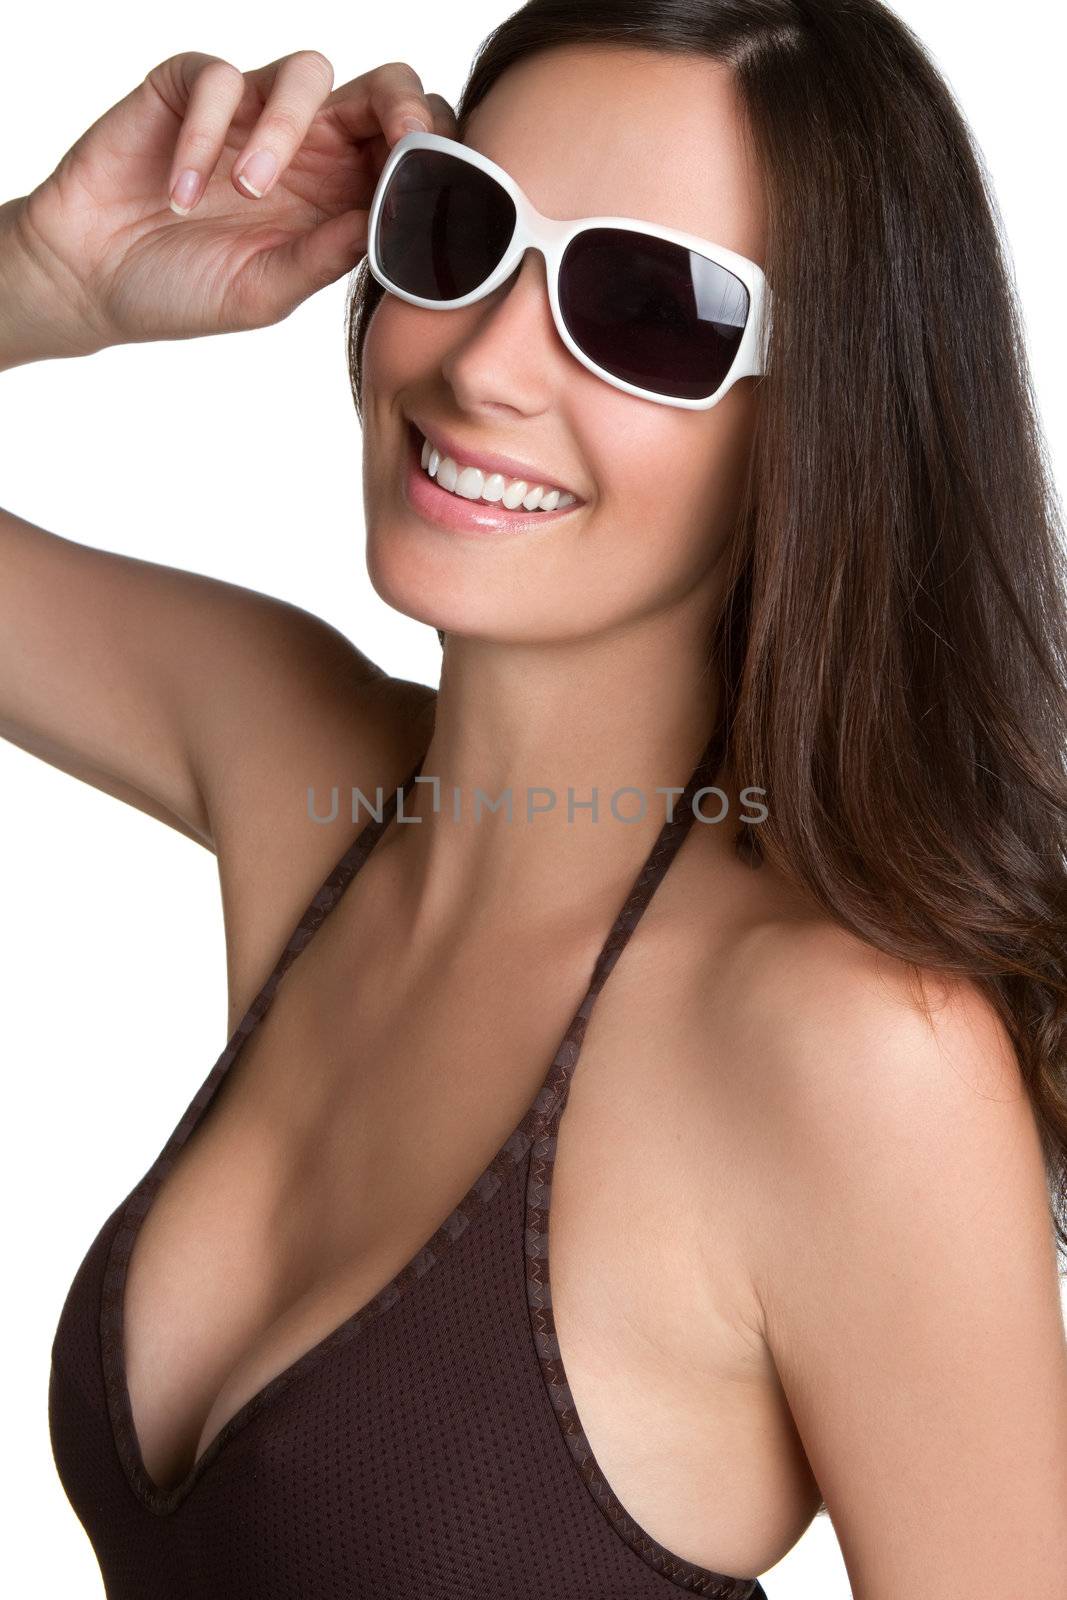 Sunglasses Bikini Woman by keeweeboy